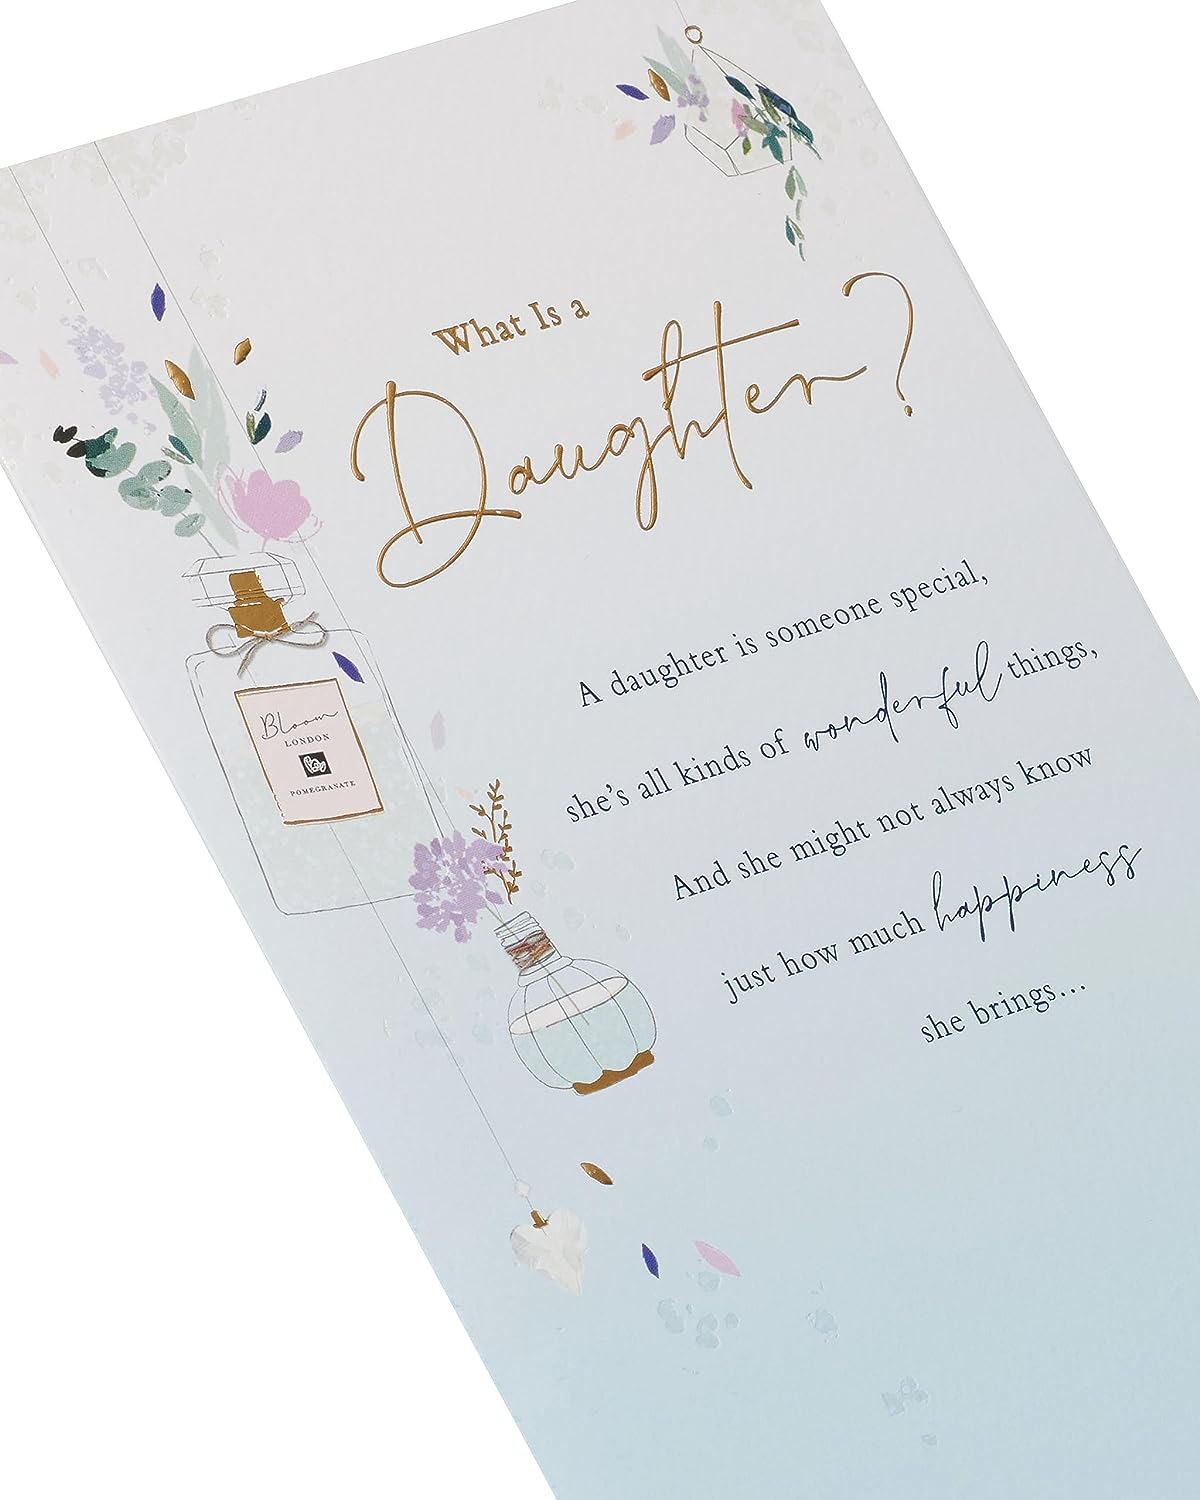 Sentimental Design Daughter Birthday Card